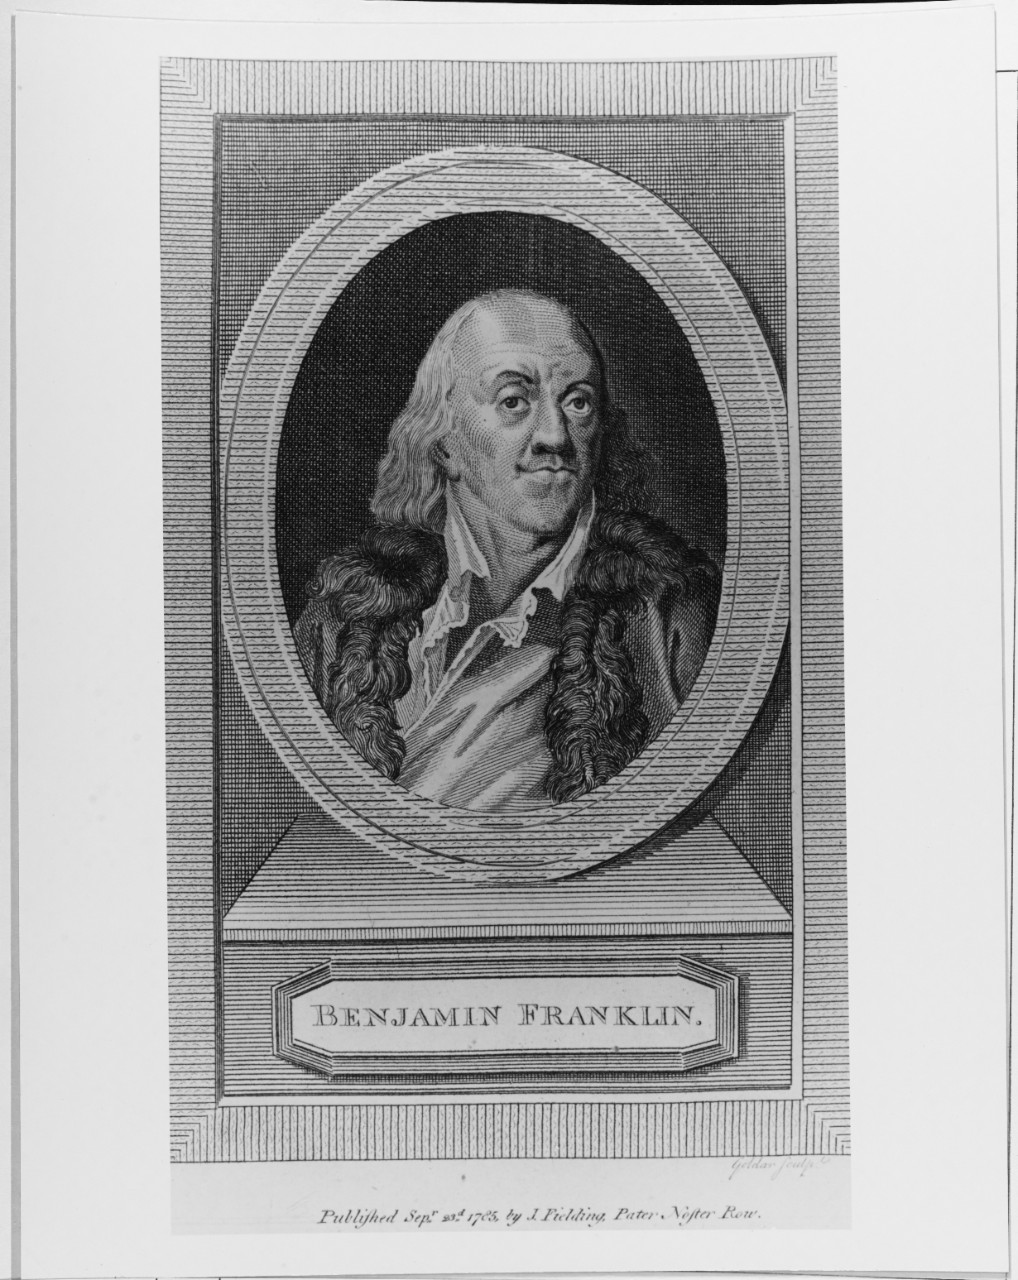 Benjamin Franklin (1706-1790), American philosopher and statesman